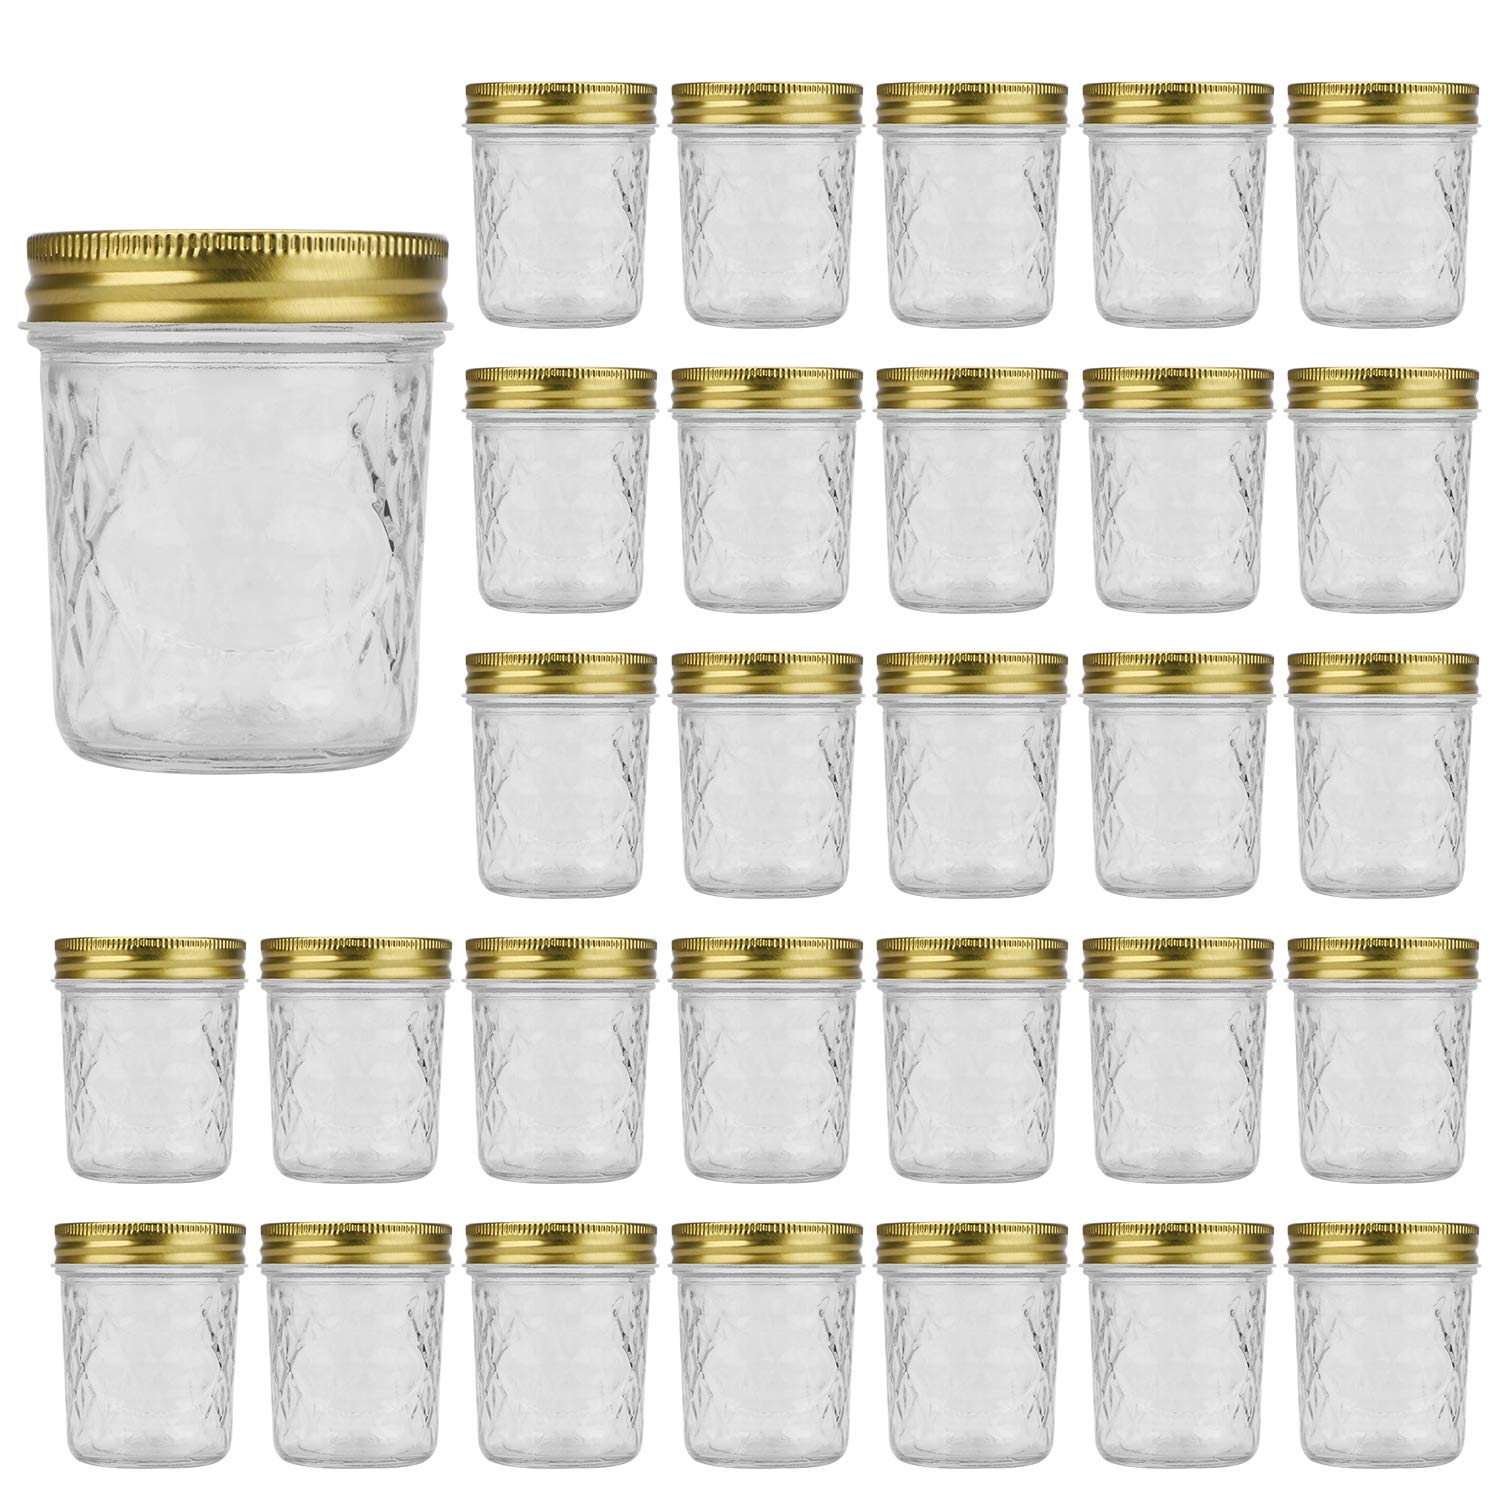 6 oz Glass Jars With Regular Lids,Mini Wide Mouth Mason Jars,Storage Jars Clear Small Canning Jars With Gold Lids,Canning Jars For Honey,Herbs,Jam,...